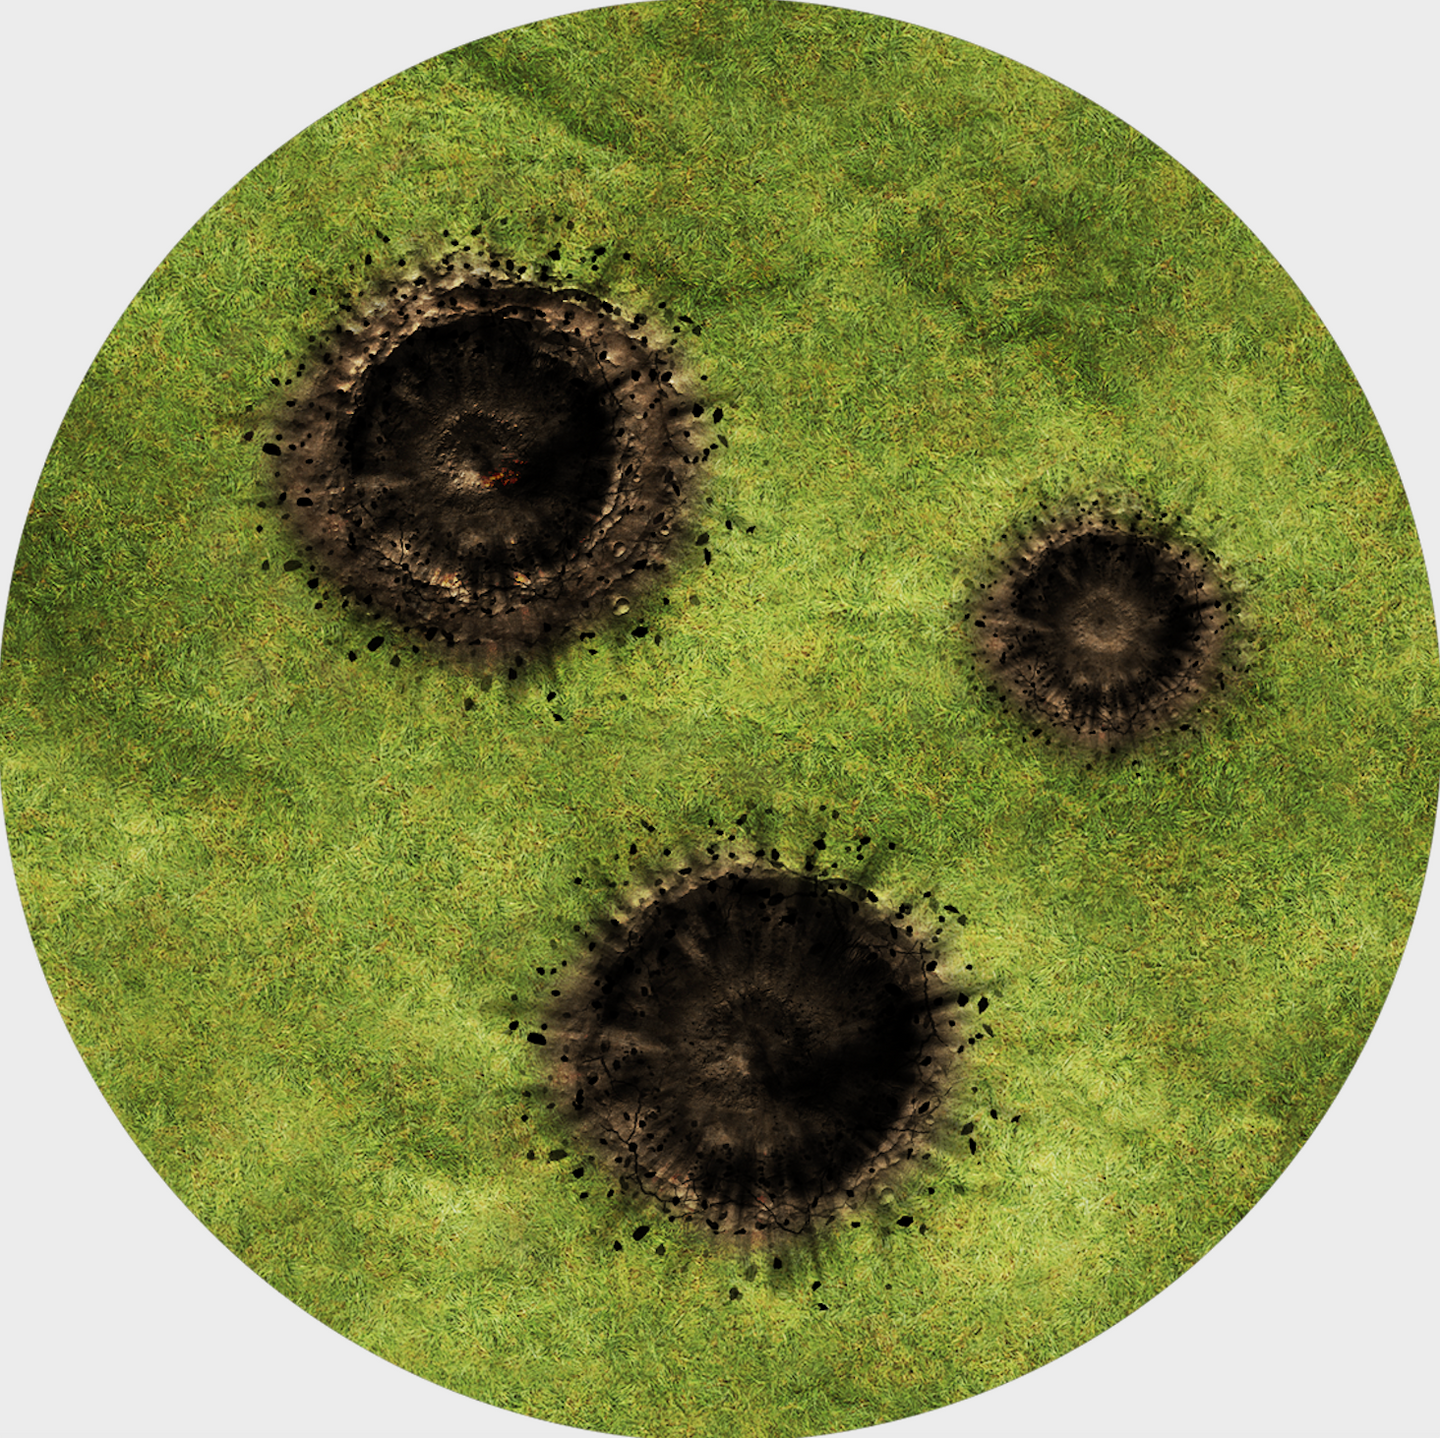 Terrain disks - Craters - Grass